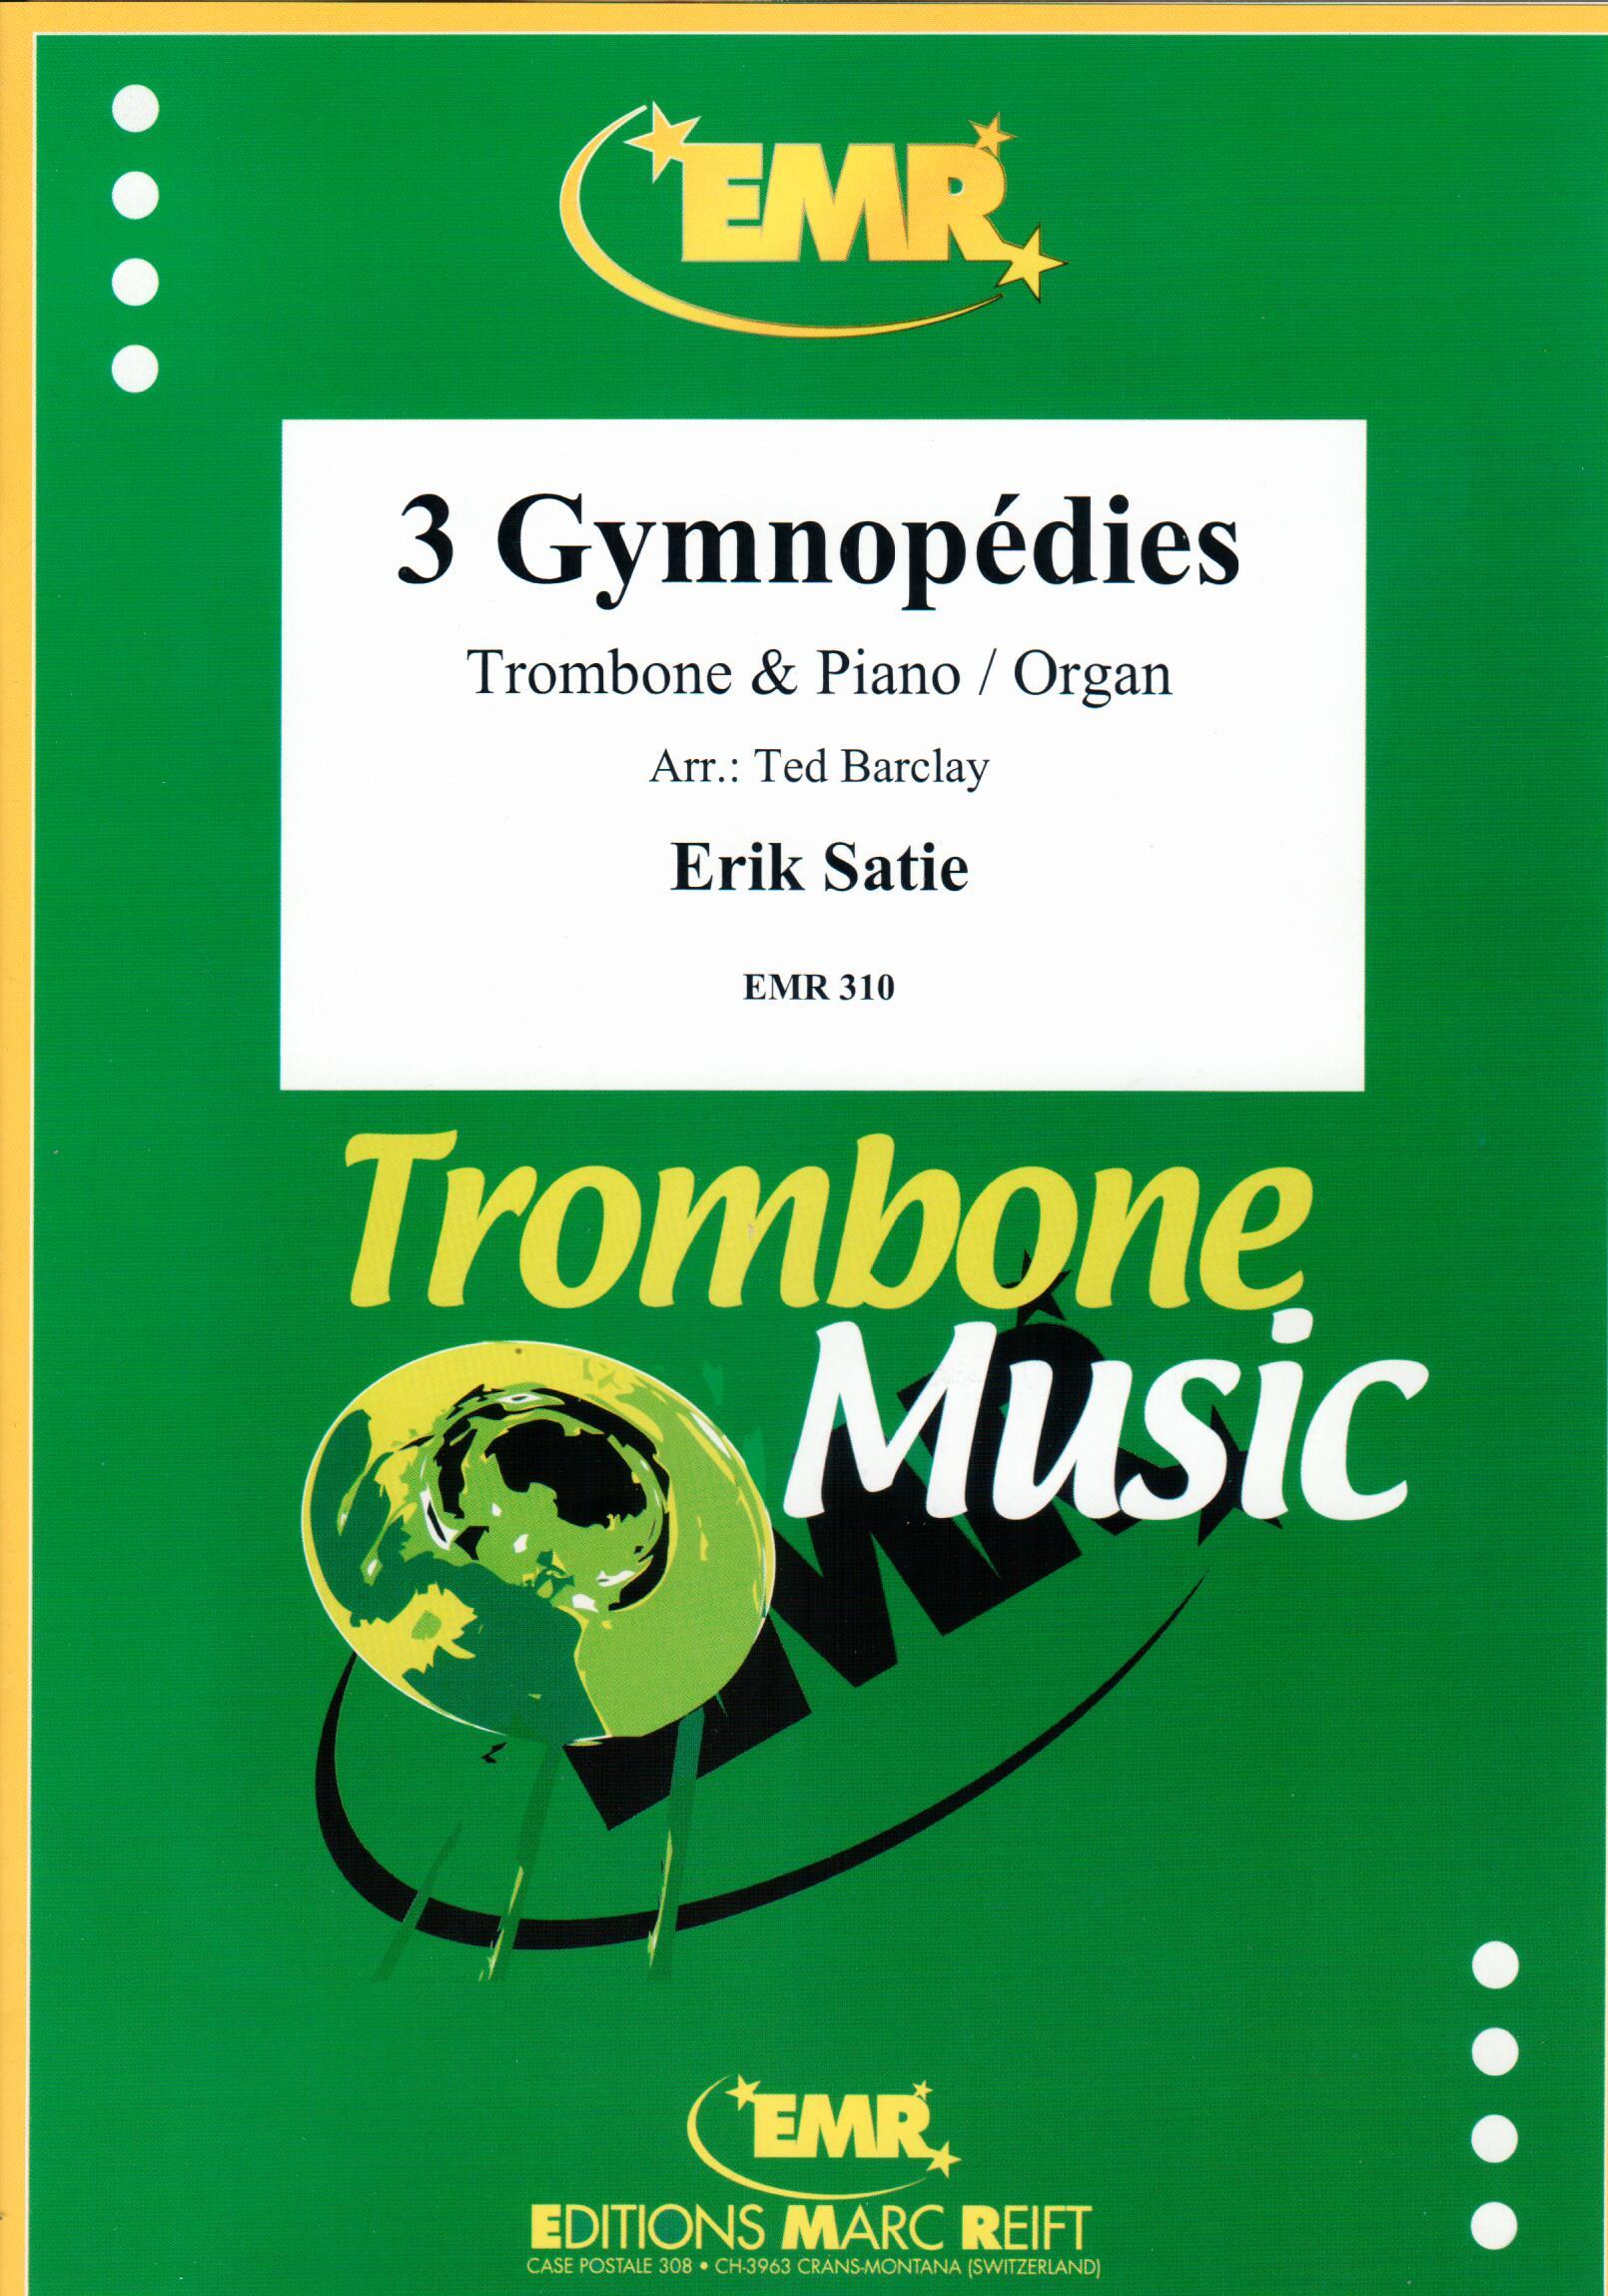 3 GYMNOPéDIES, SOLOS - Trombone